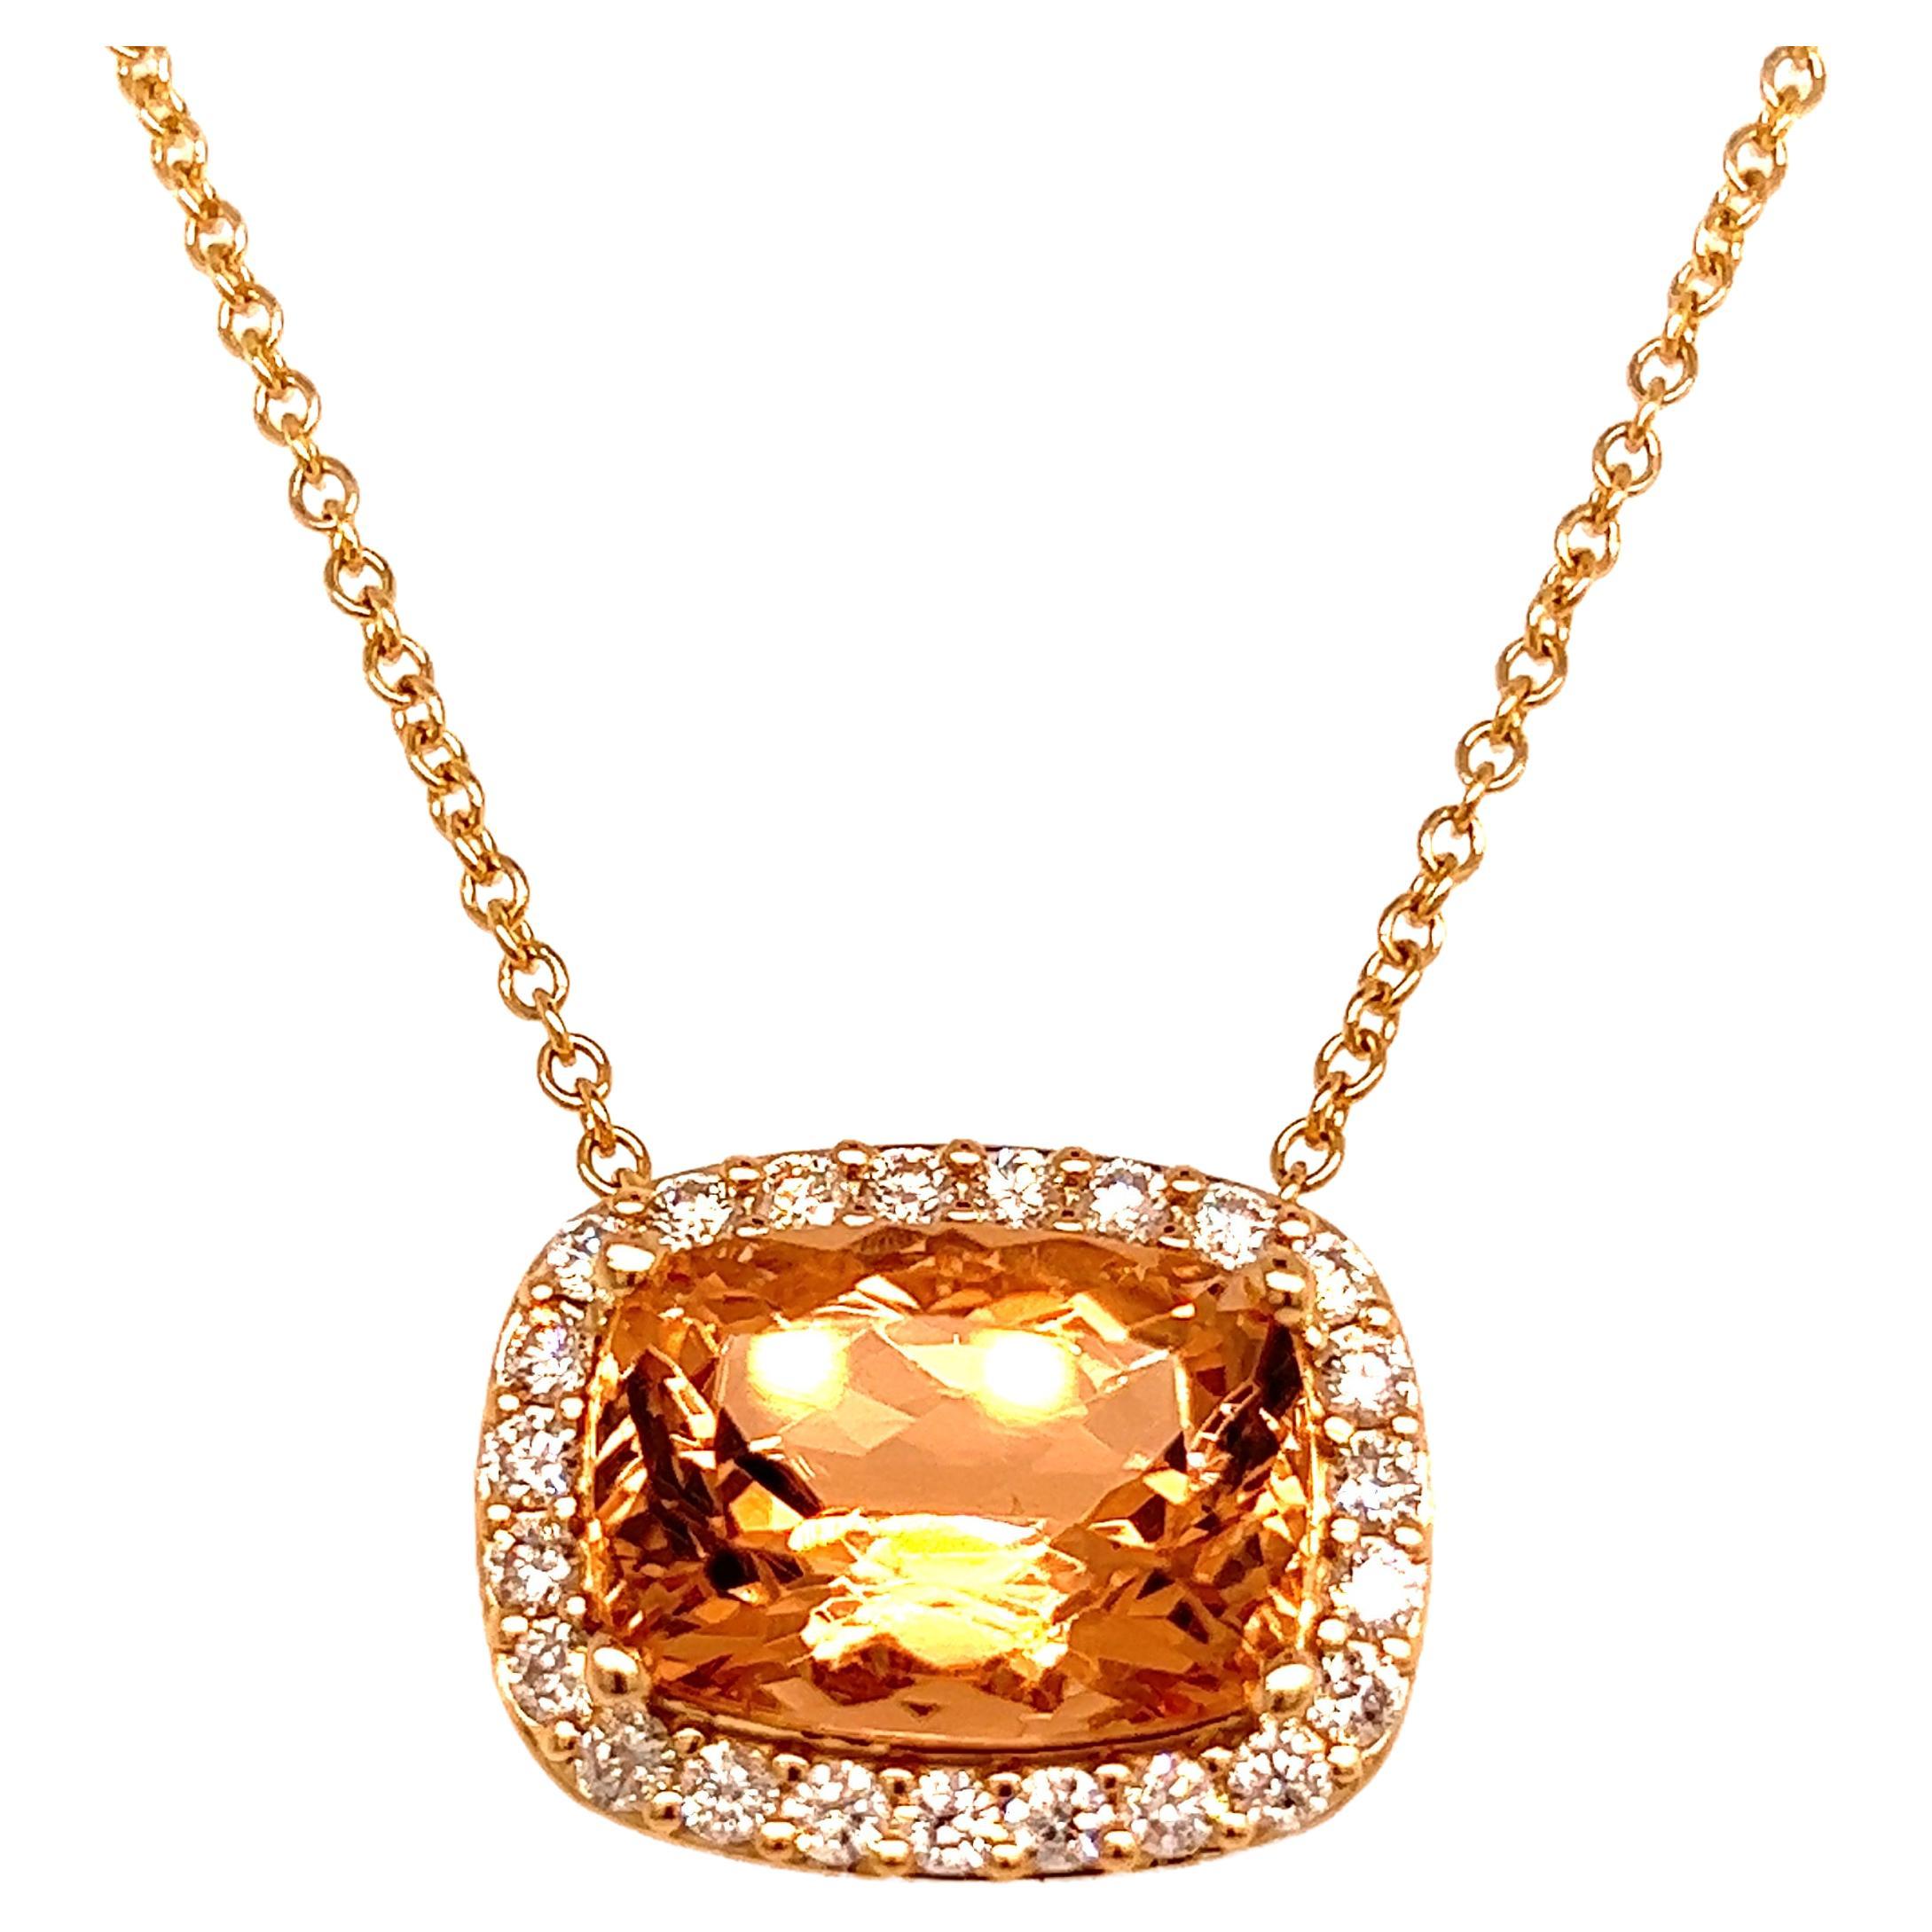 Collier pendentif en or 14 carats avec Morganite et diamants 7,35 carats certifiés TCW, 5 950 $ en vente